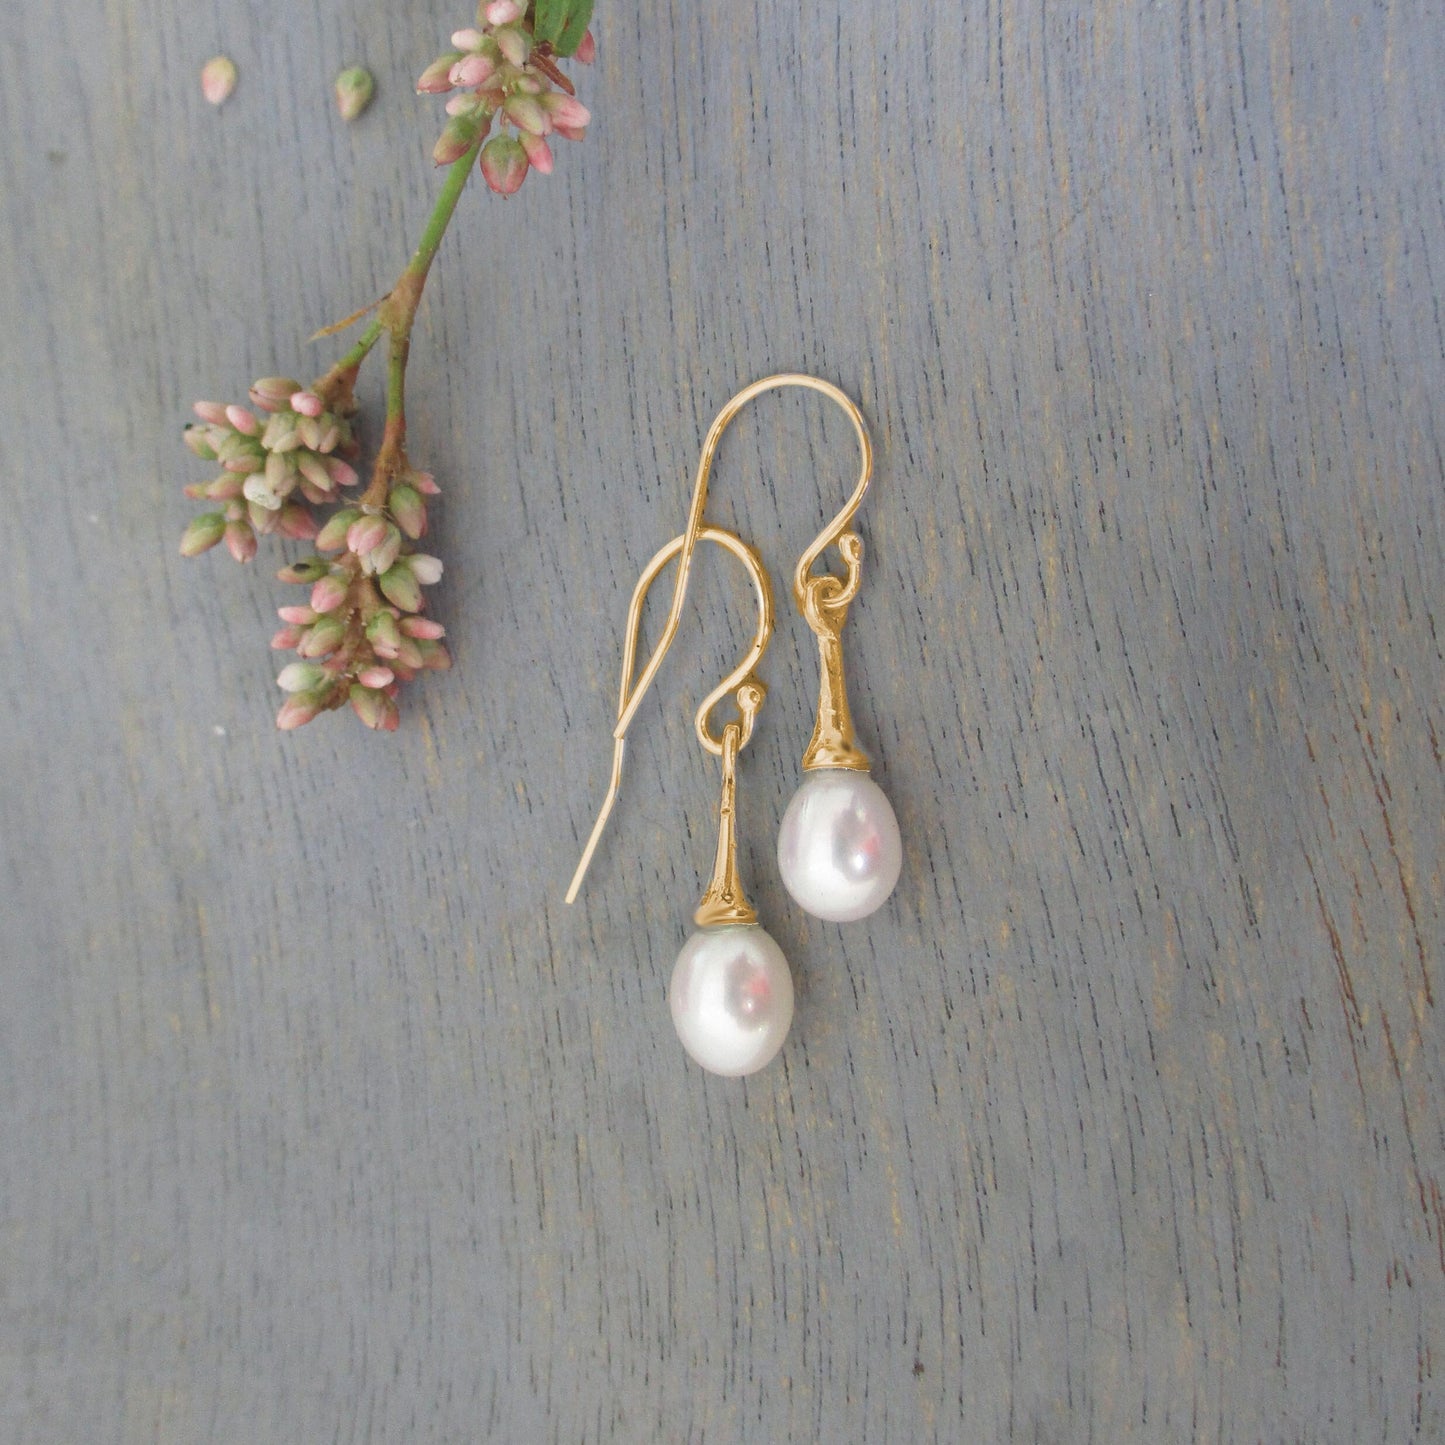 Load image into Gallery viewer, Gold and White Freshwater Teardrop Pearl Hook Earrings, 14 Karat Gold Pearl Earrings, Rose Gold Earrings
